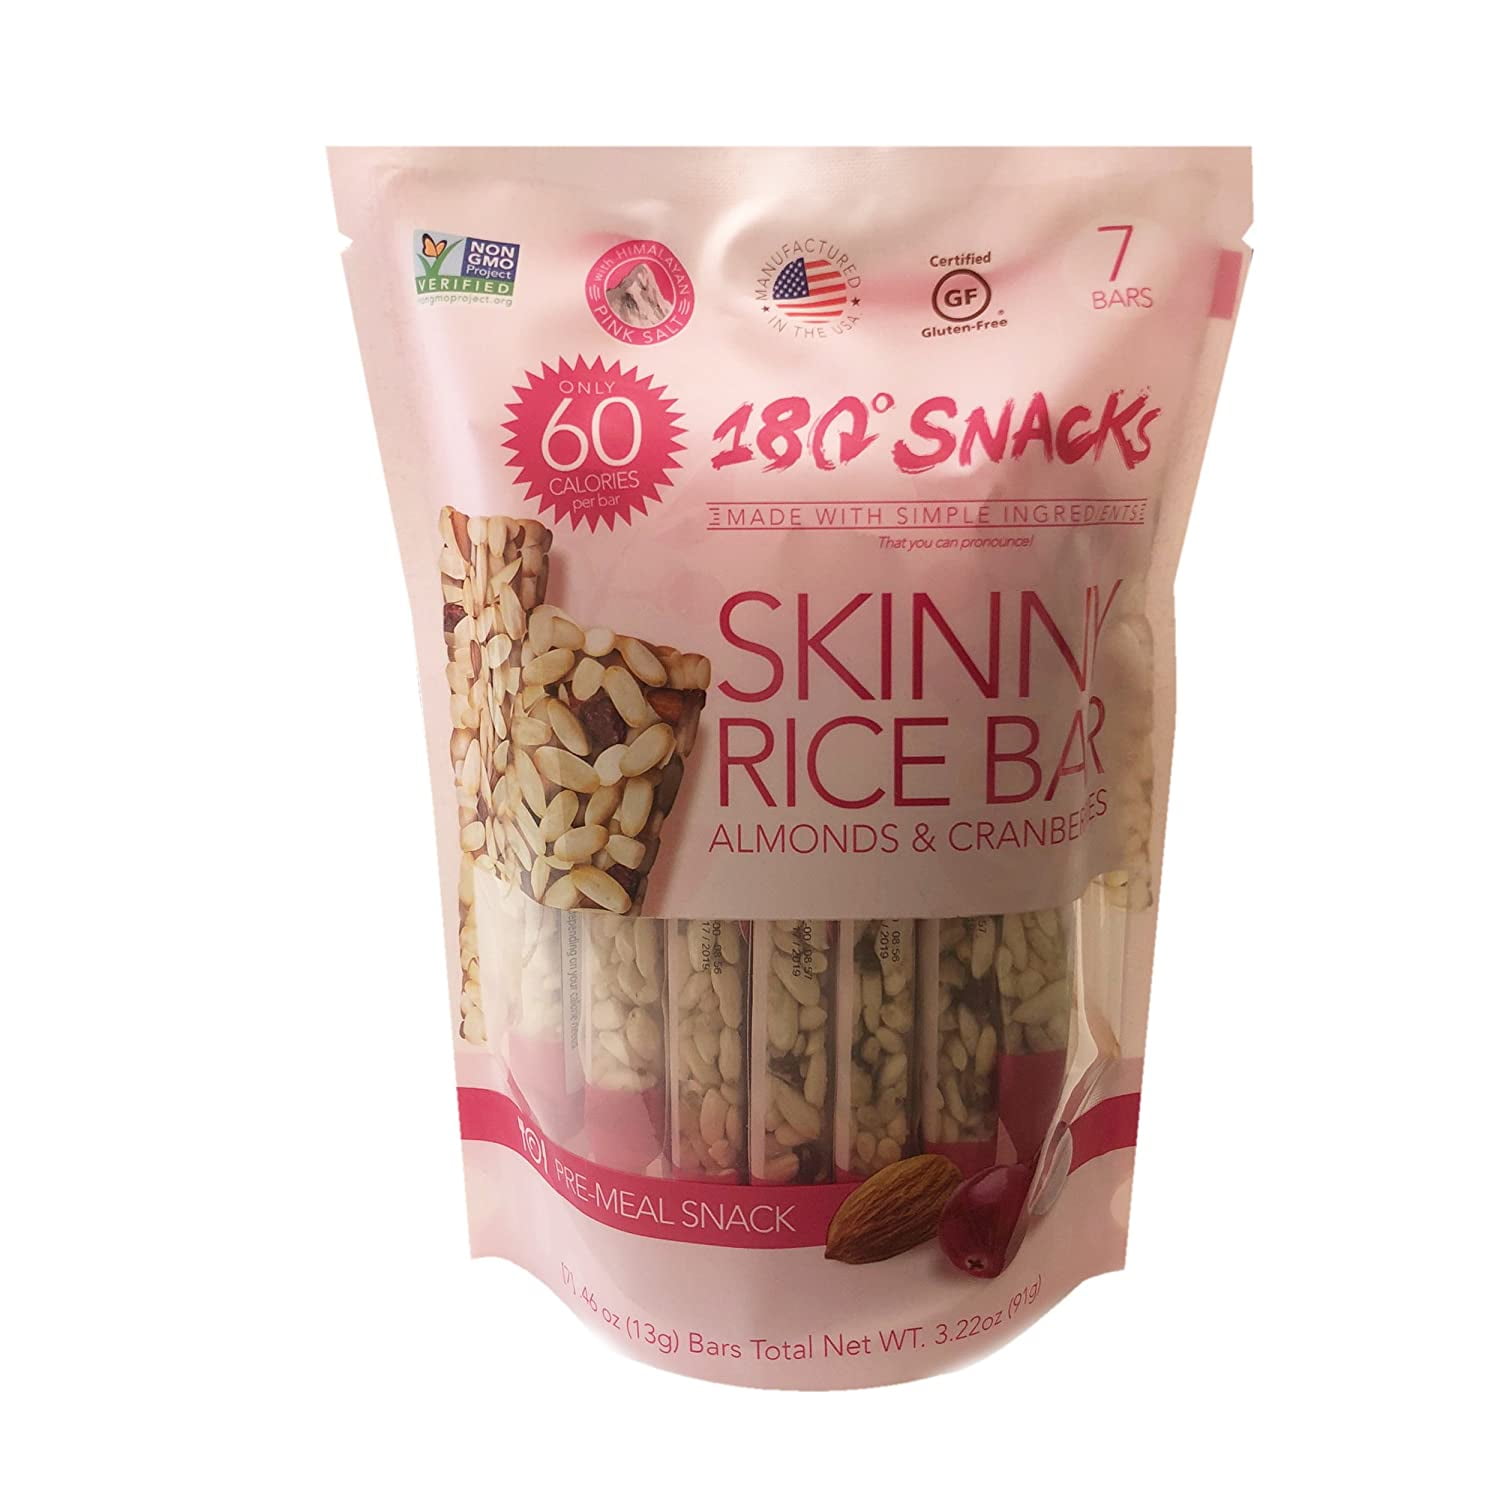 Skinny rice bar